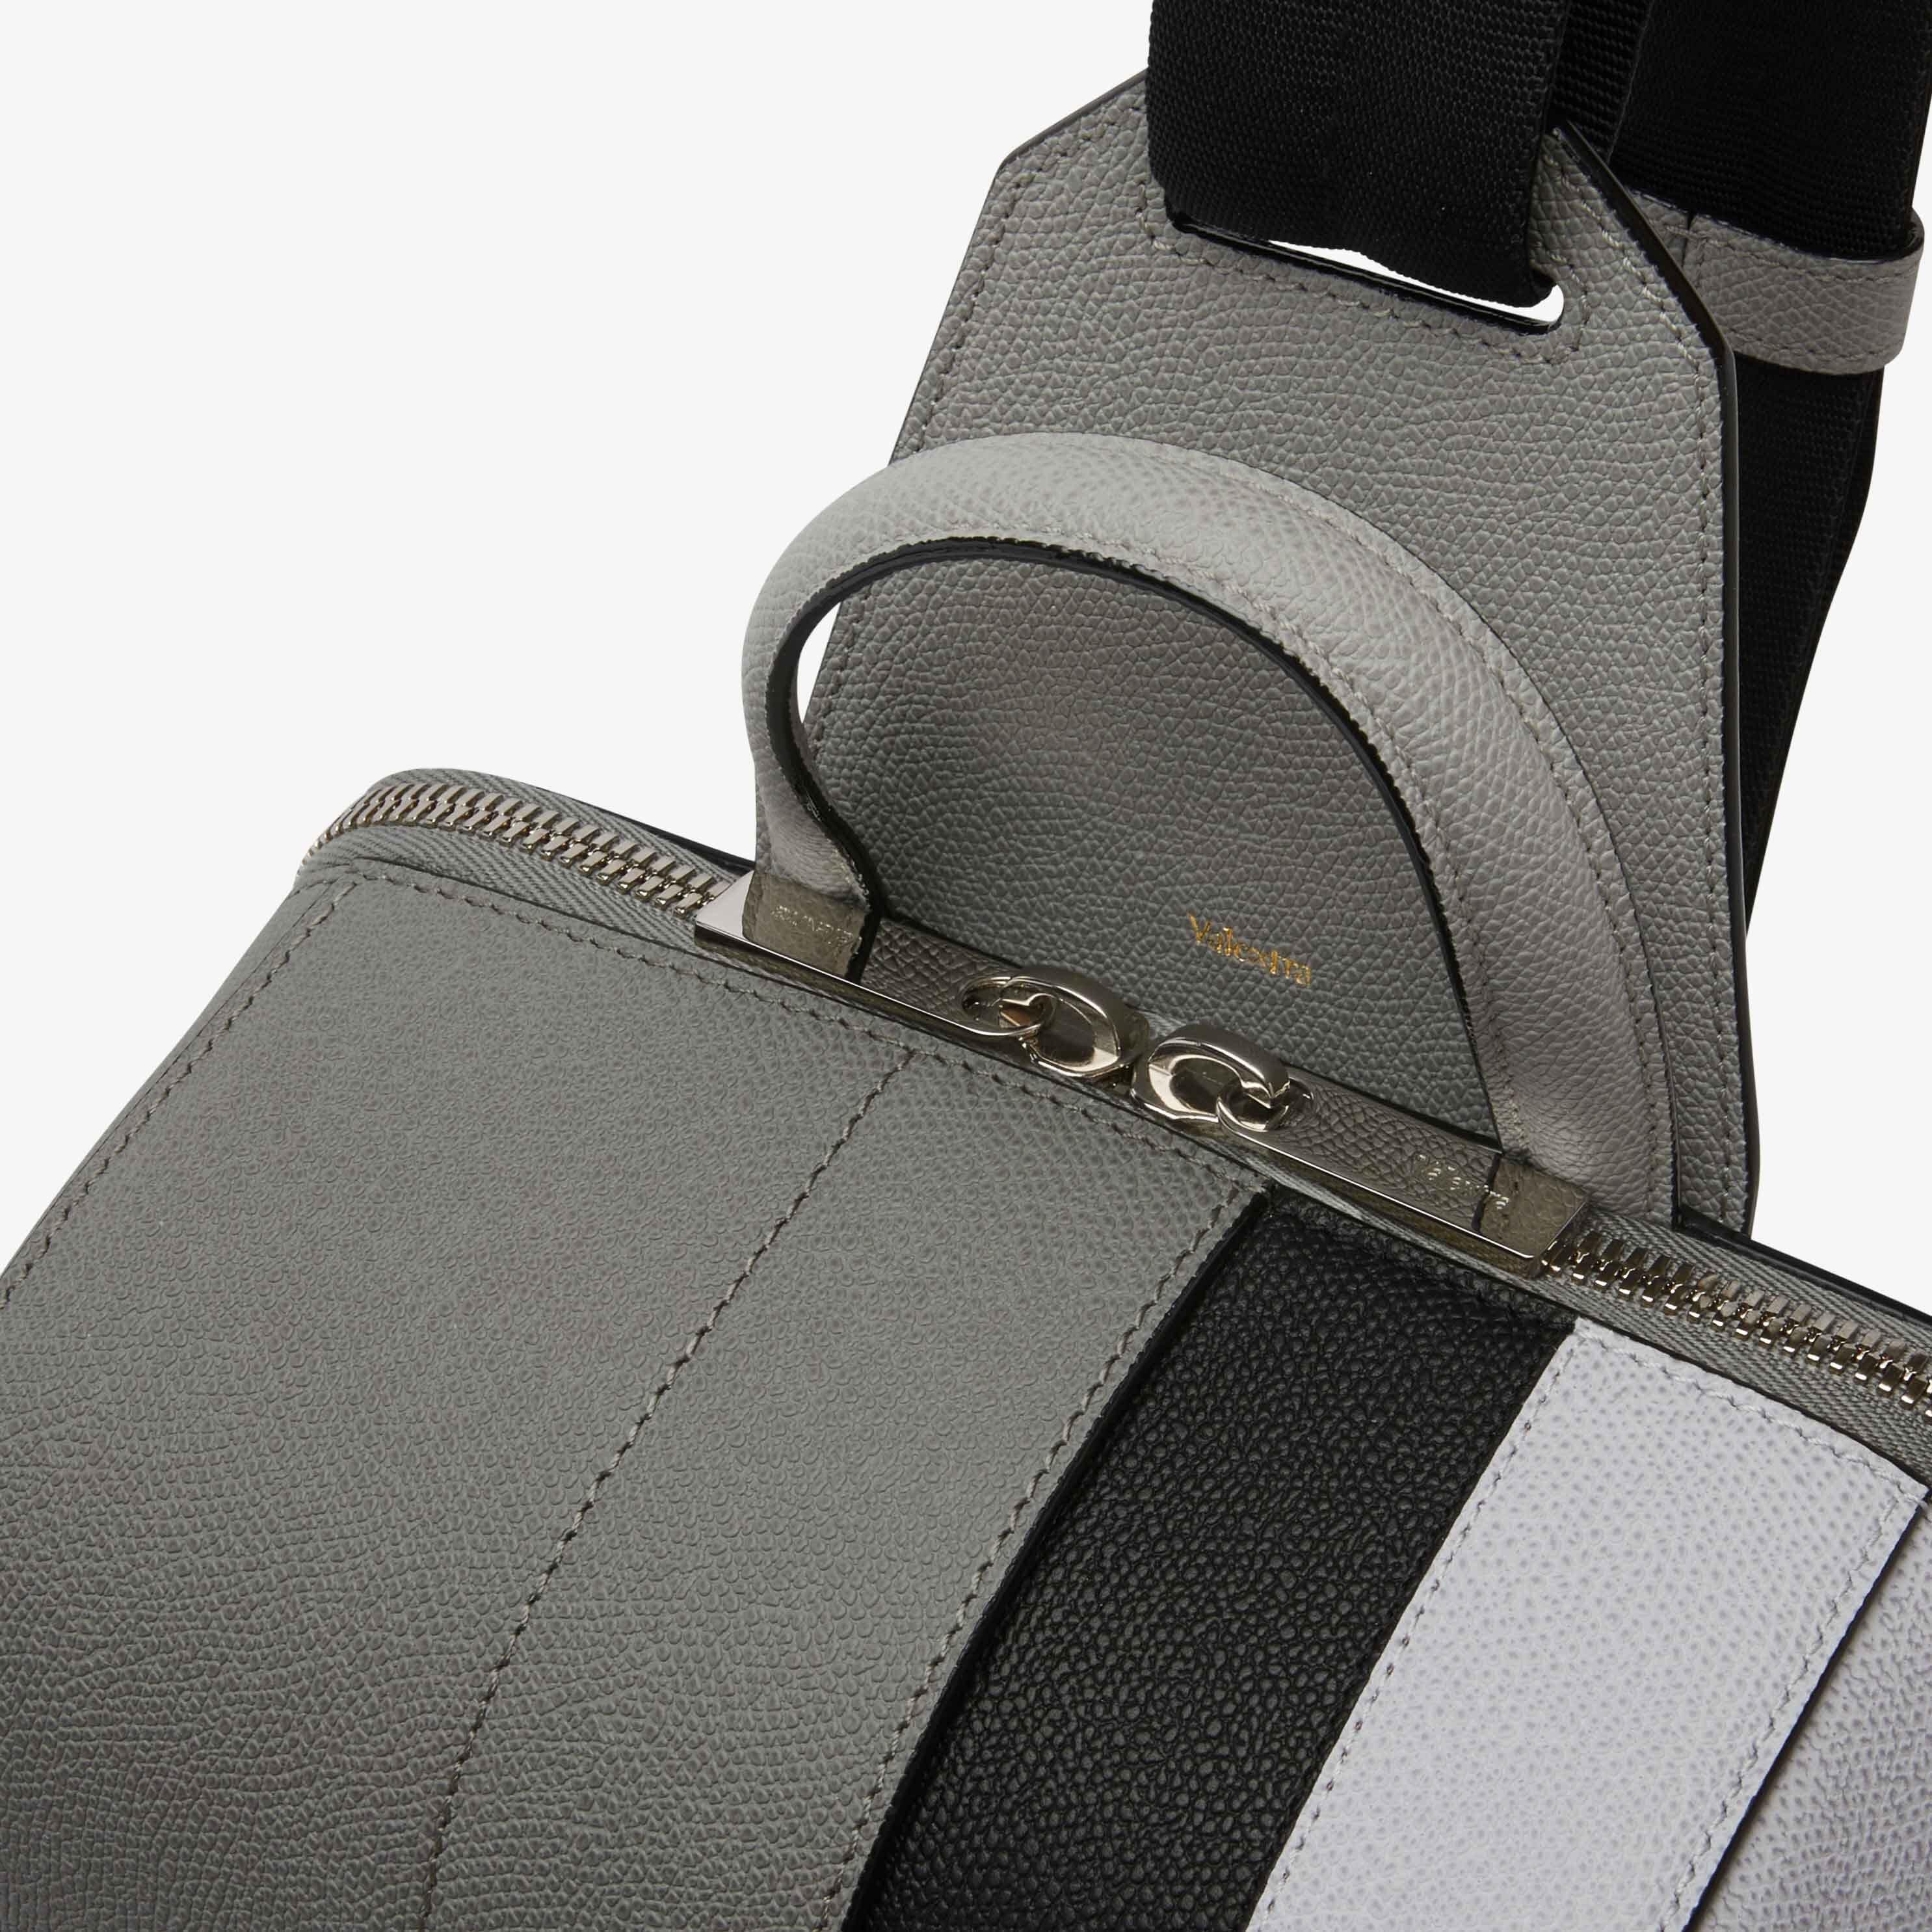 V-line Intarsia One Shoulder Backpack - Cement Grey/Black/Stone Gery - Intarsio V New Zaino - Valextra - 4